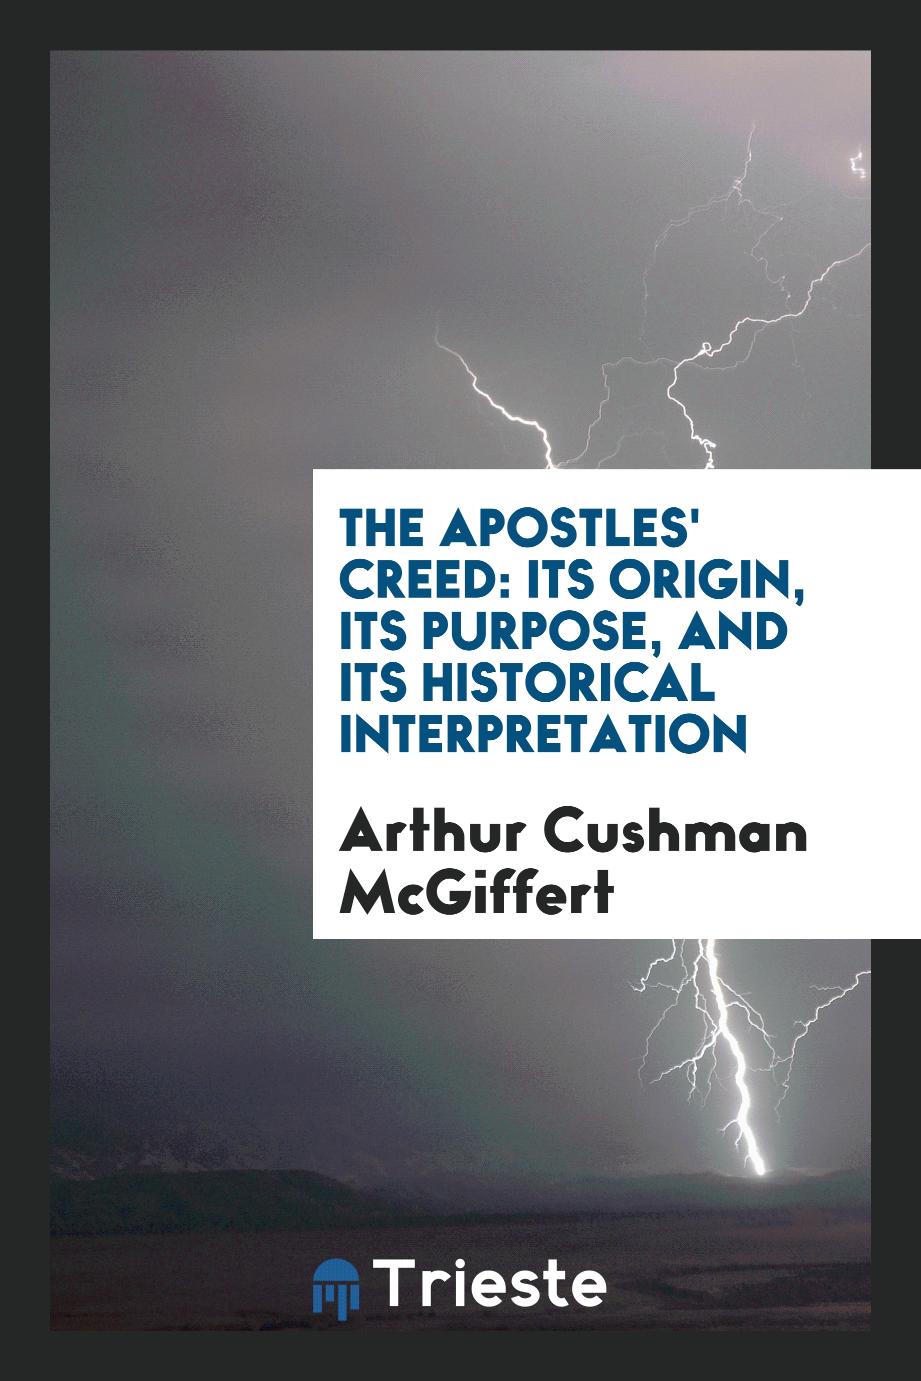 The Apostles' creed: Its Origin, Its Purpose, and Its Historical Interpretation